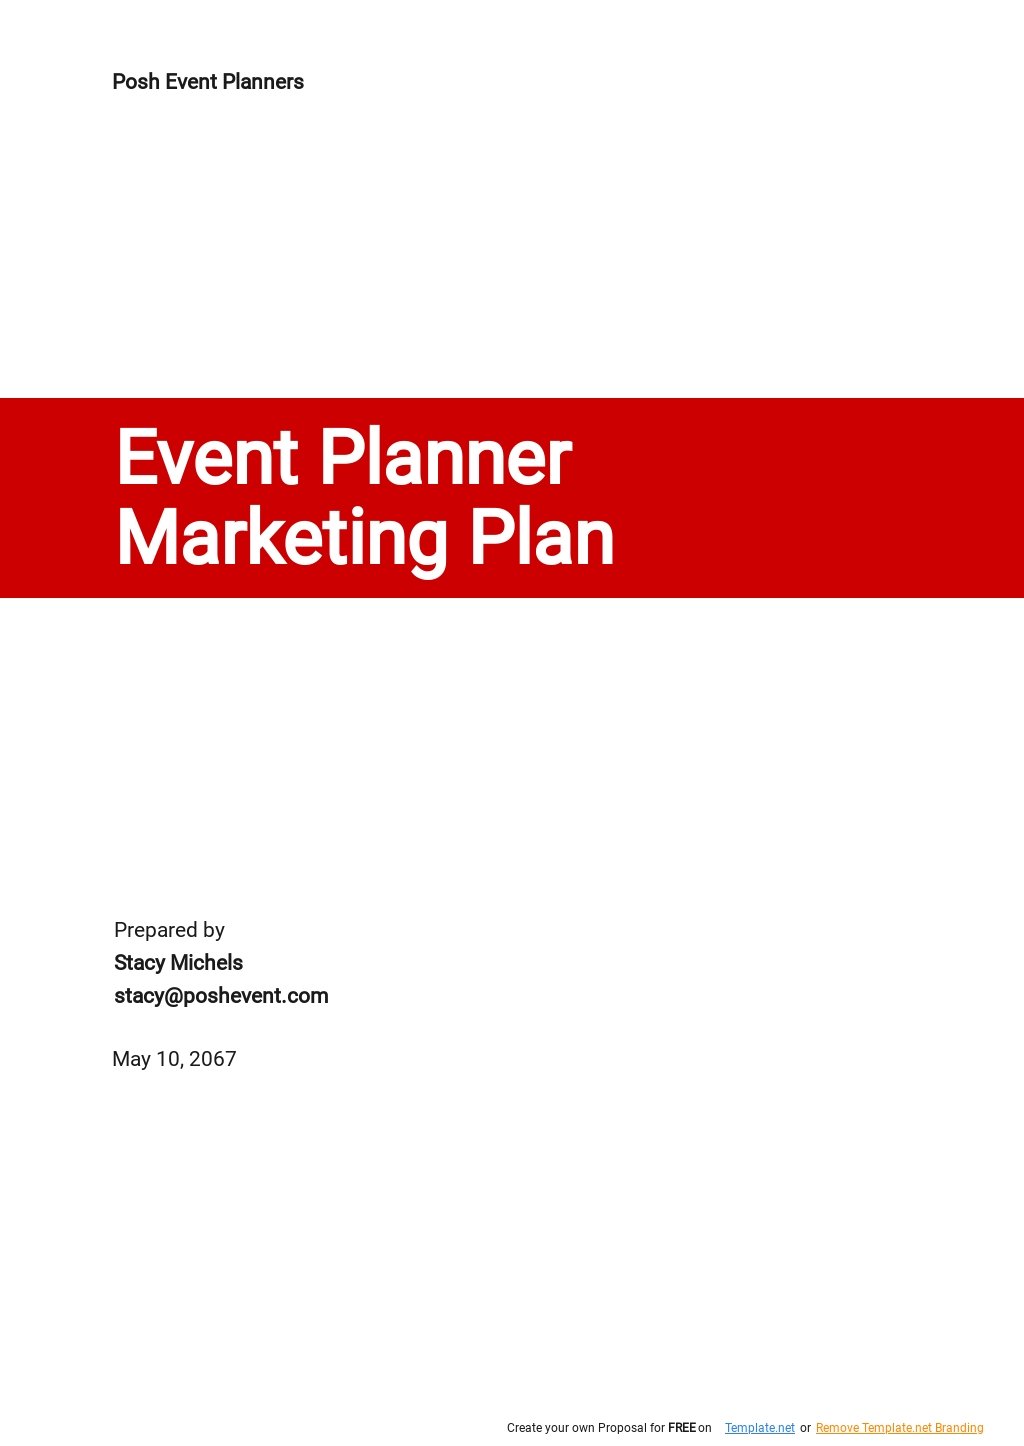 Event Planner Marketing Plan Template